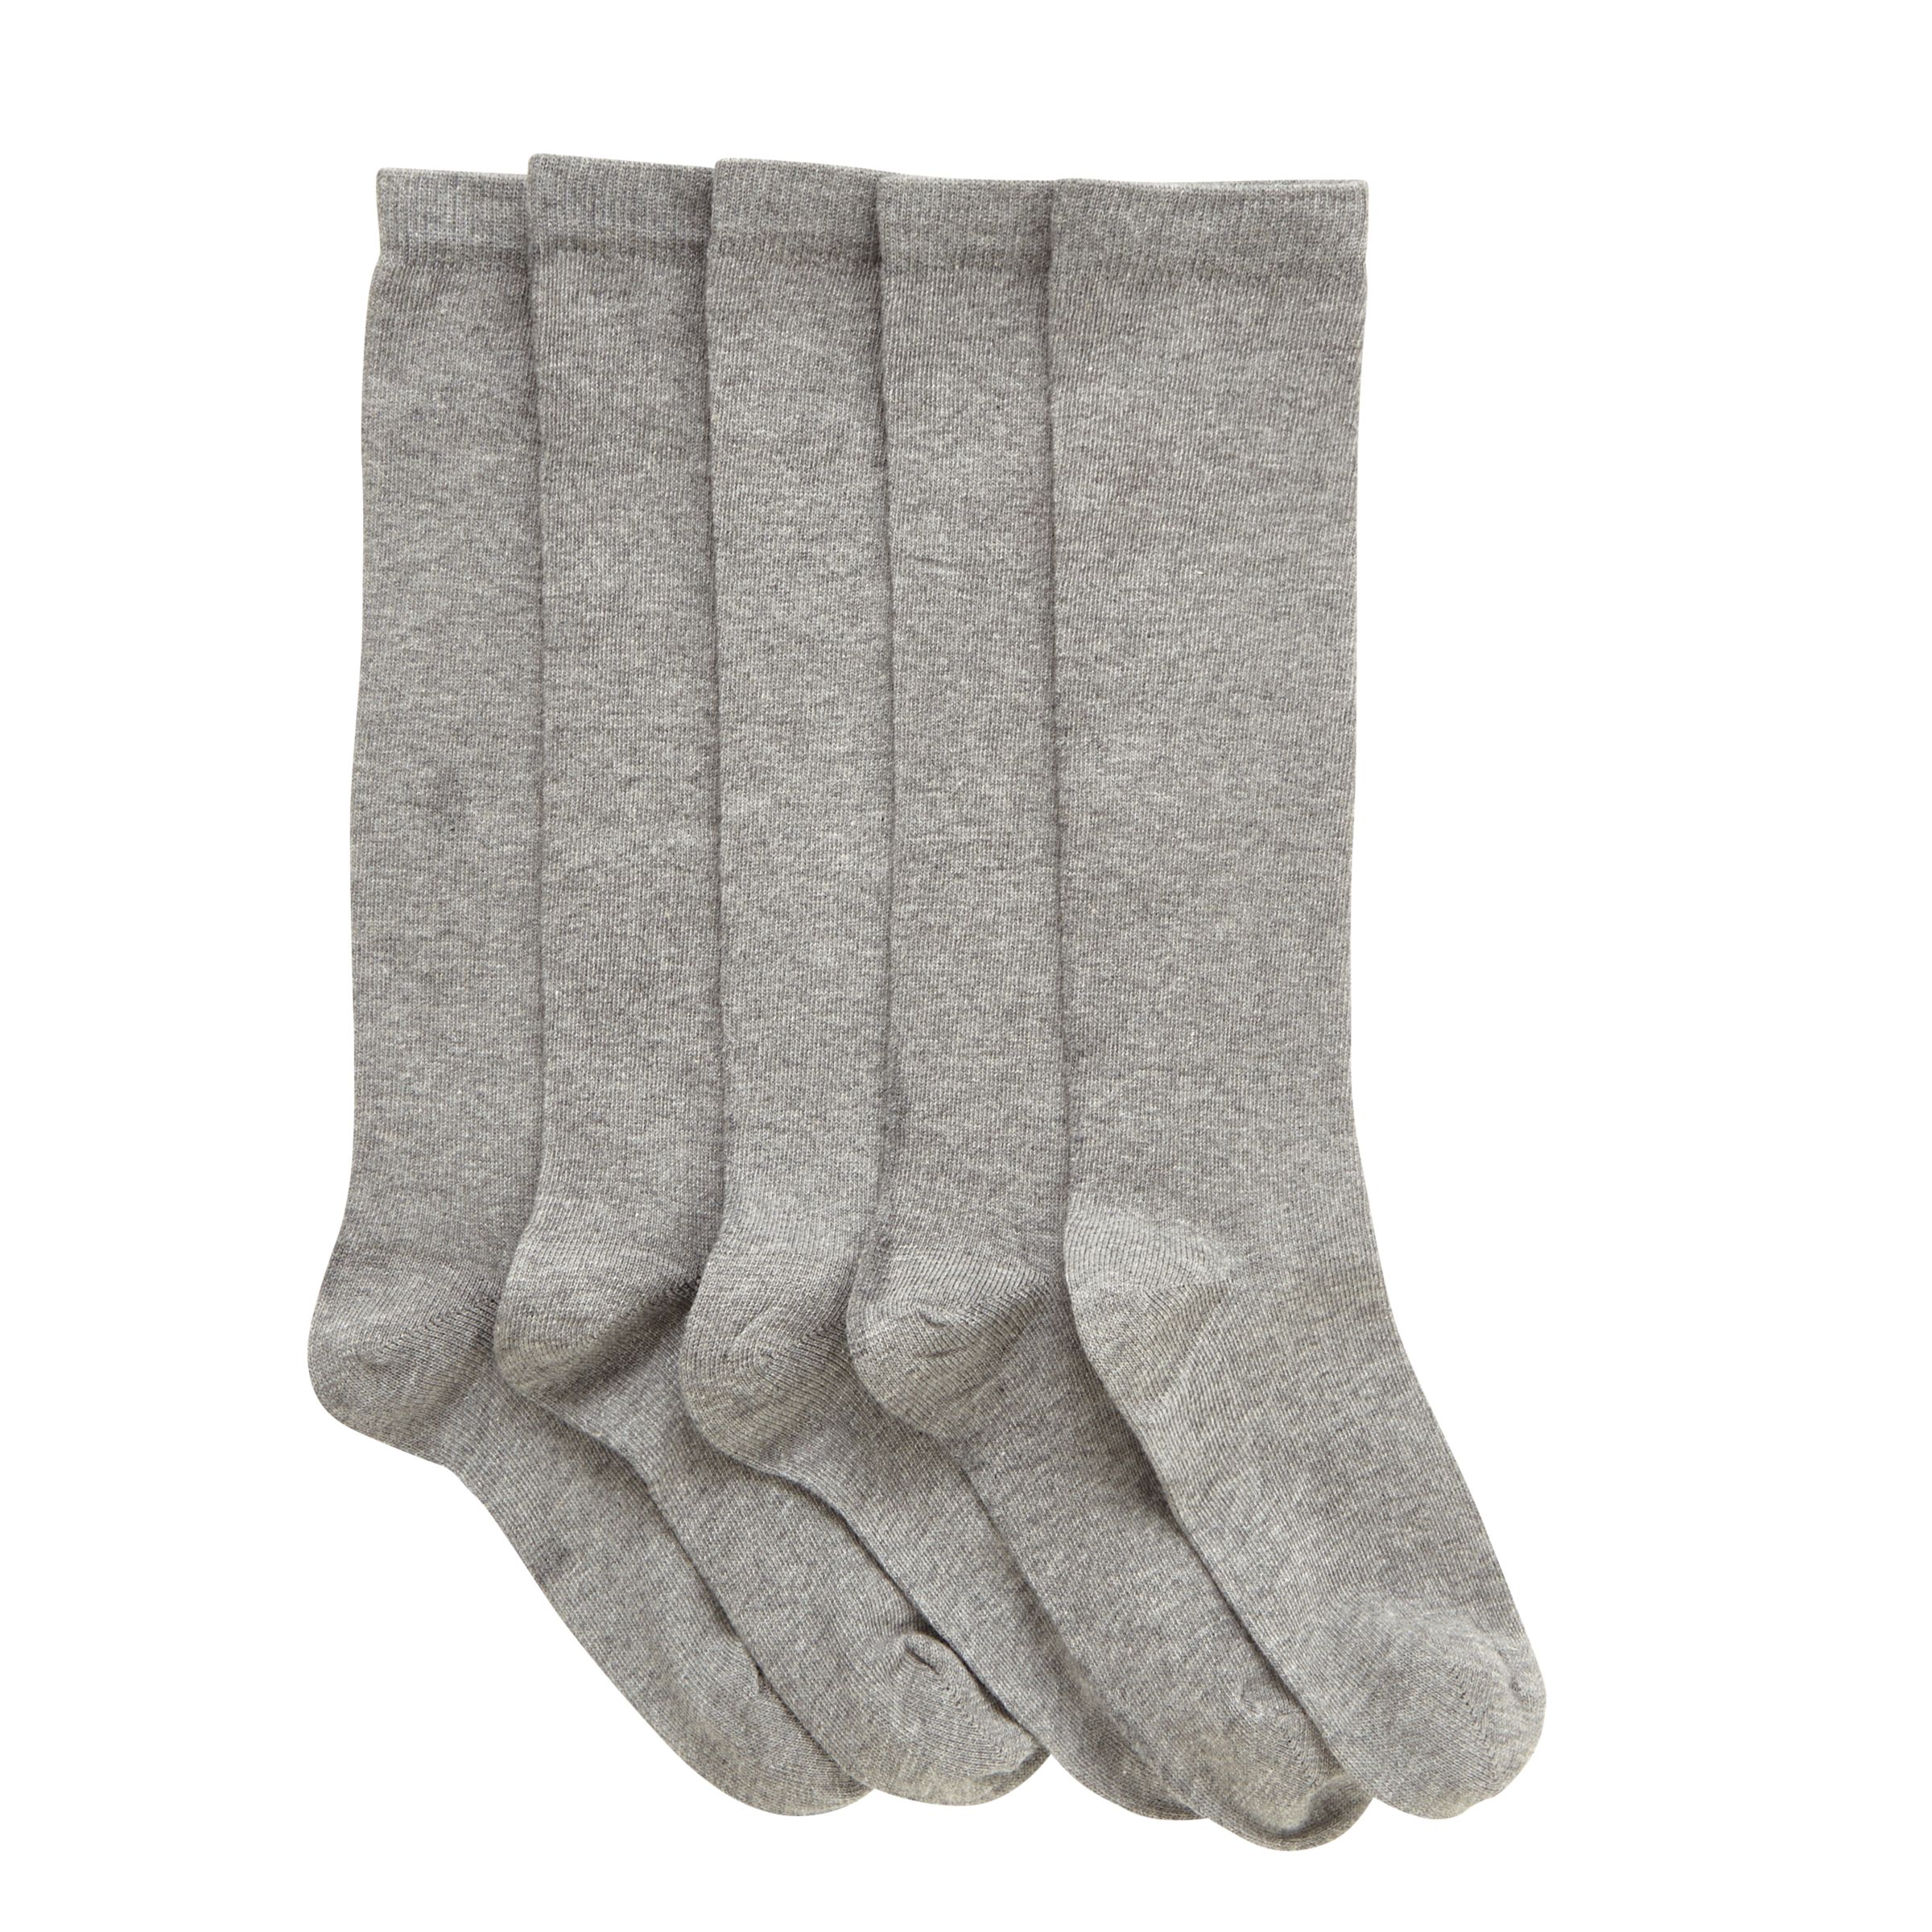 John Lewis Kids' Knee High Socks, Pack of 5, Grey, 6-8.5 Jnr